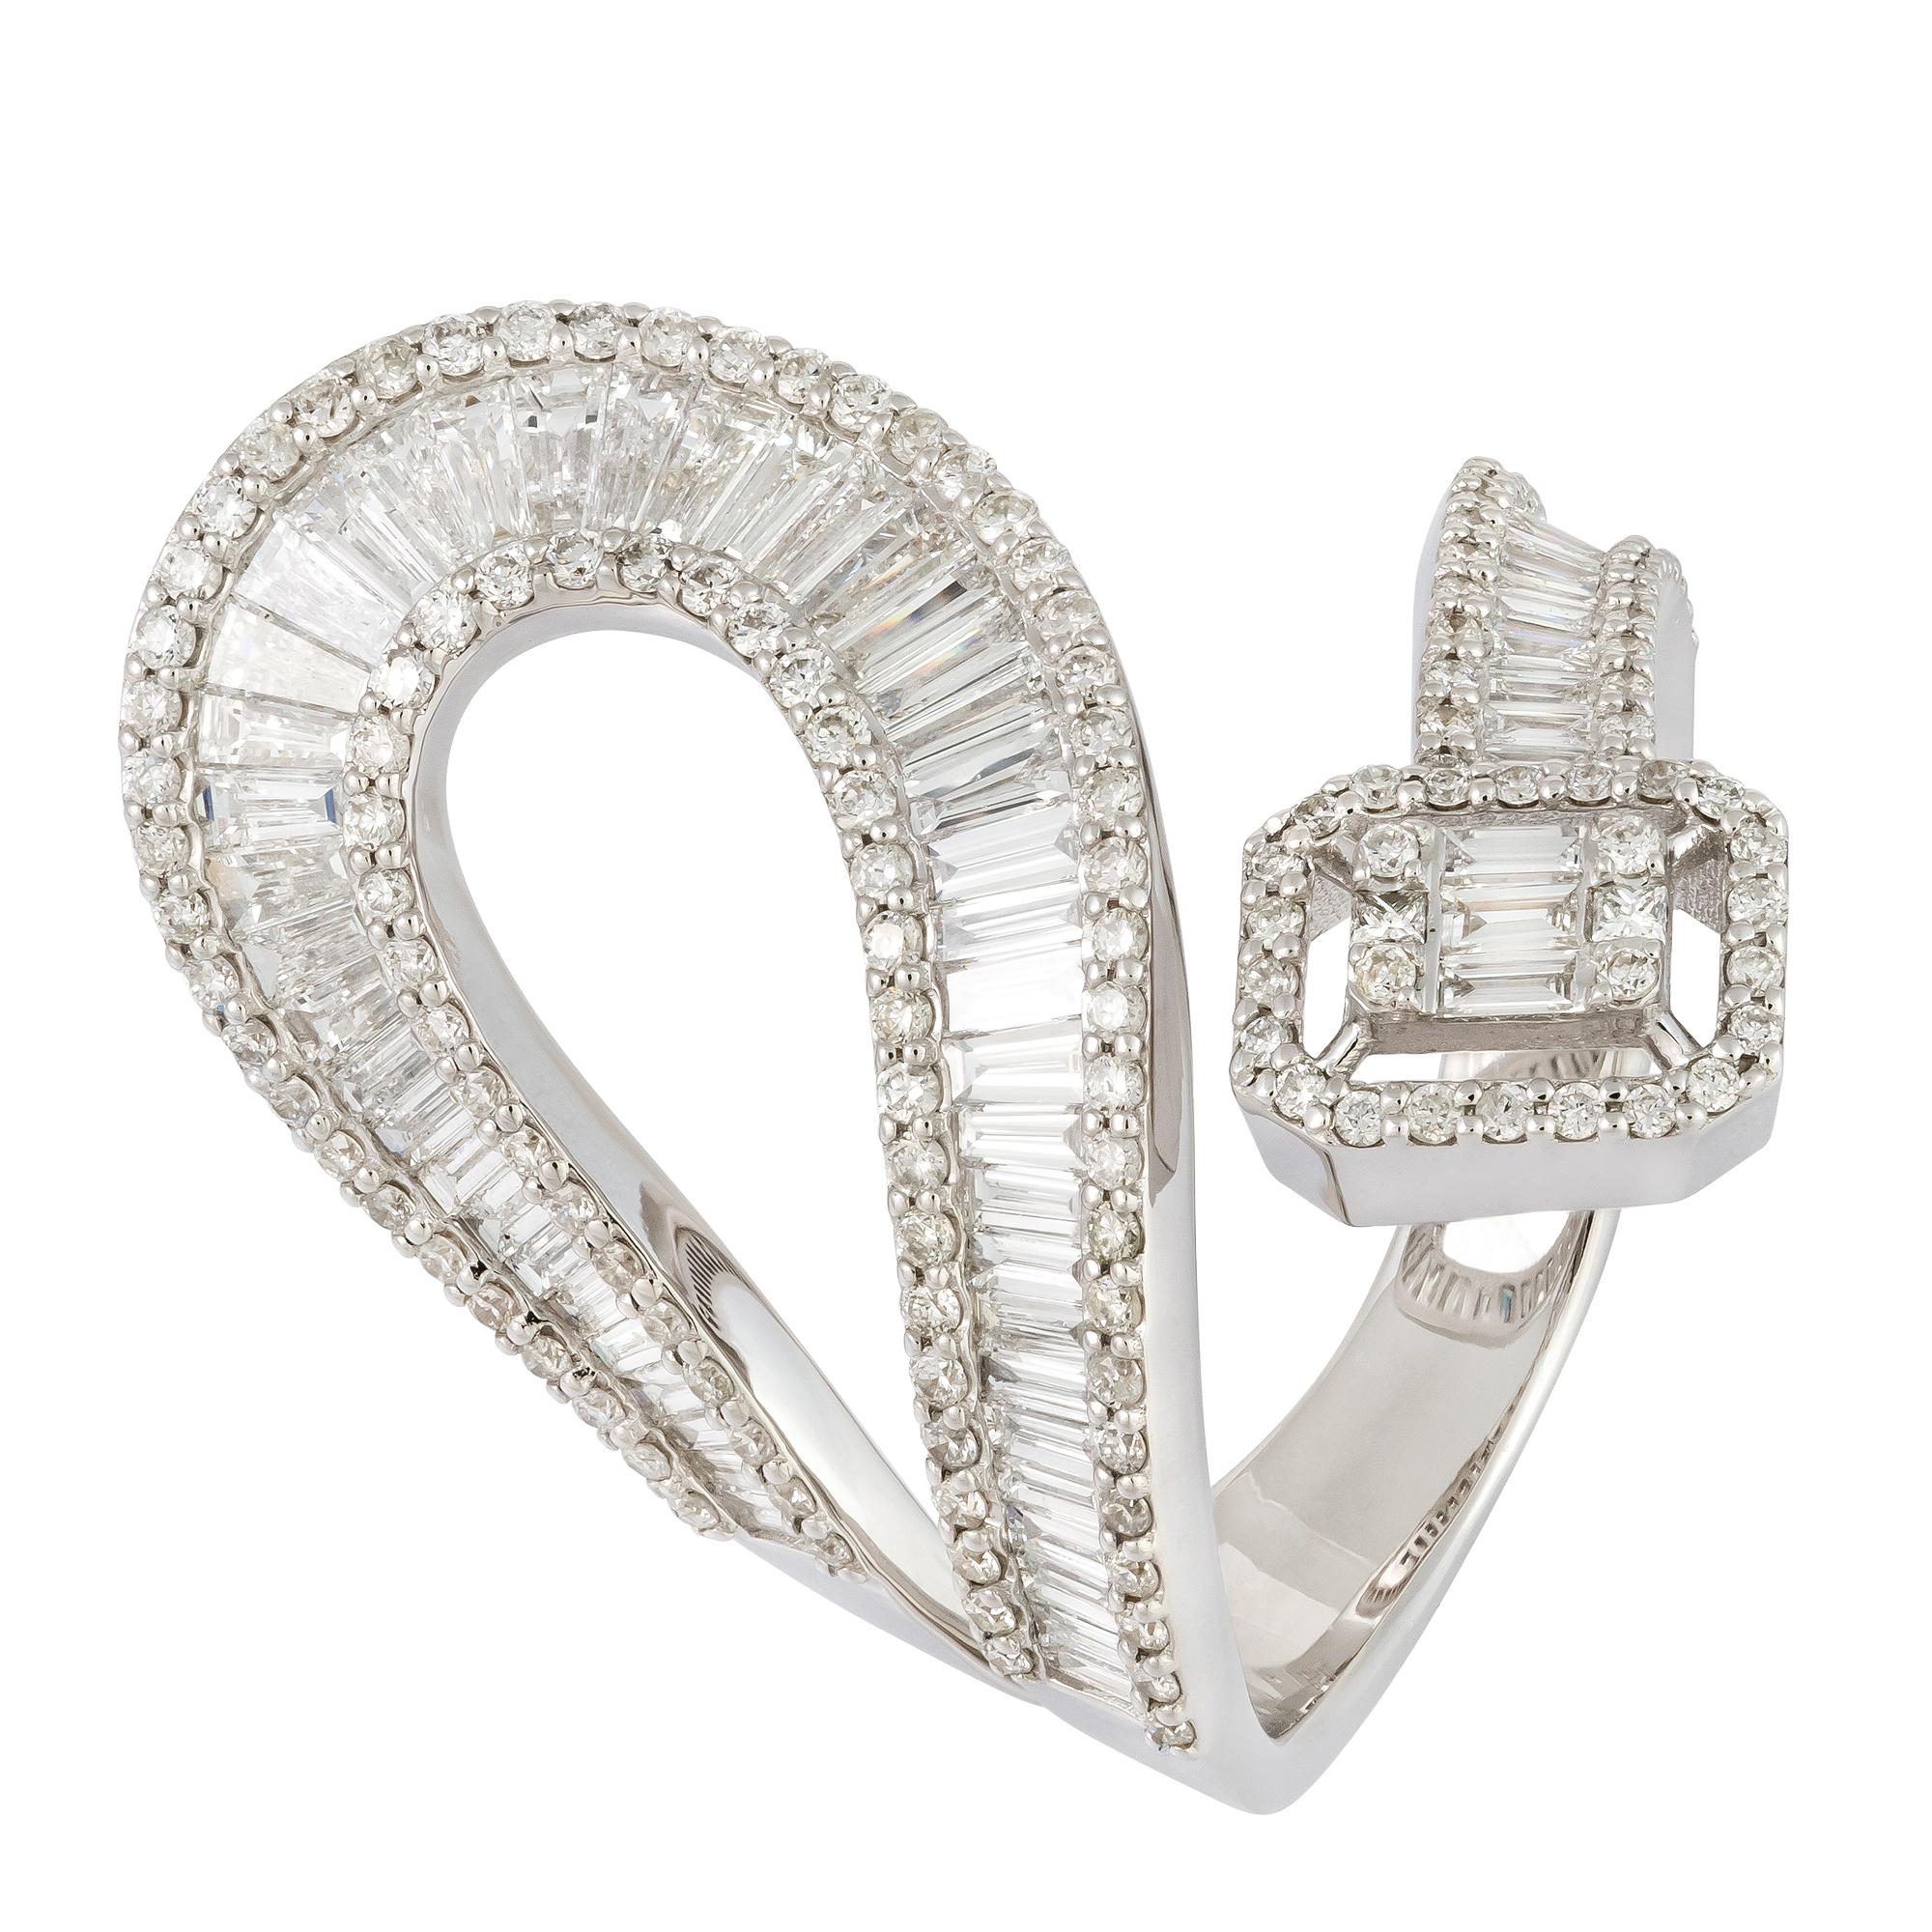 For Sale:  Unique White 18K Gold White Diamond Ring For Her 3